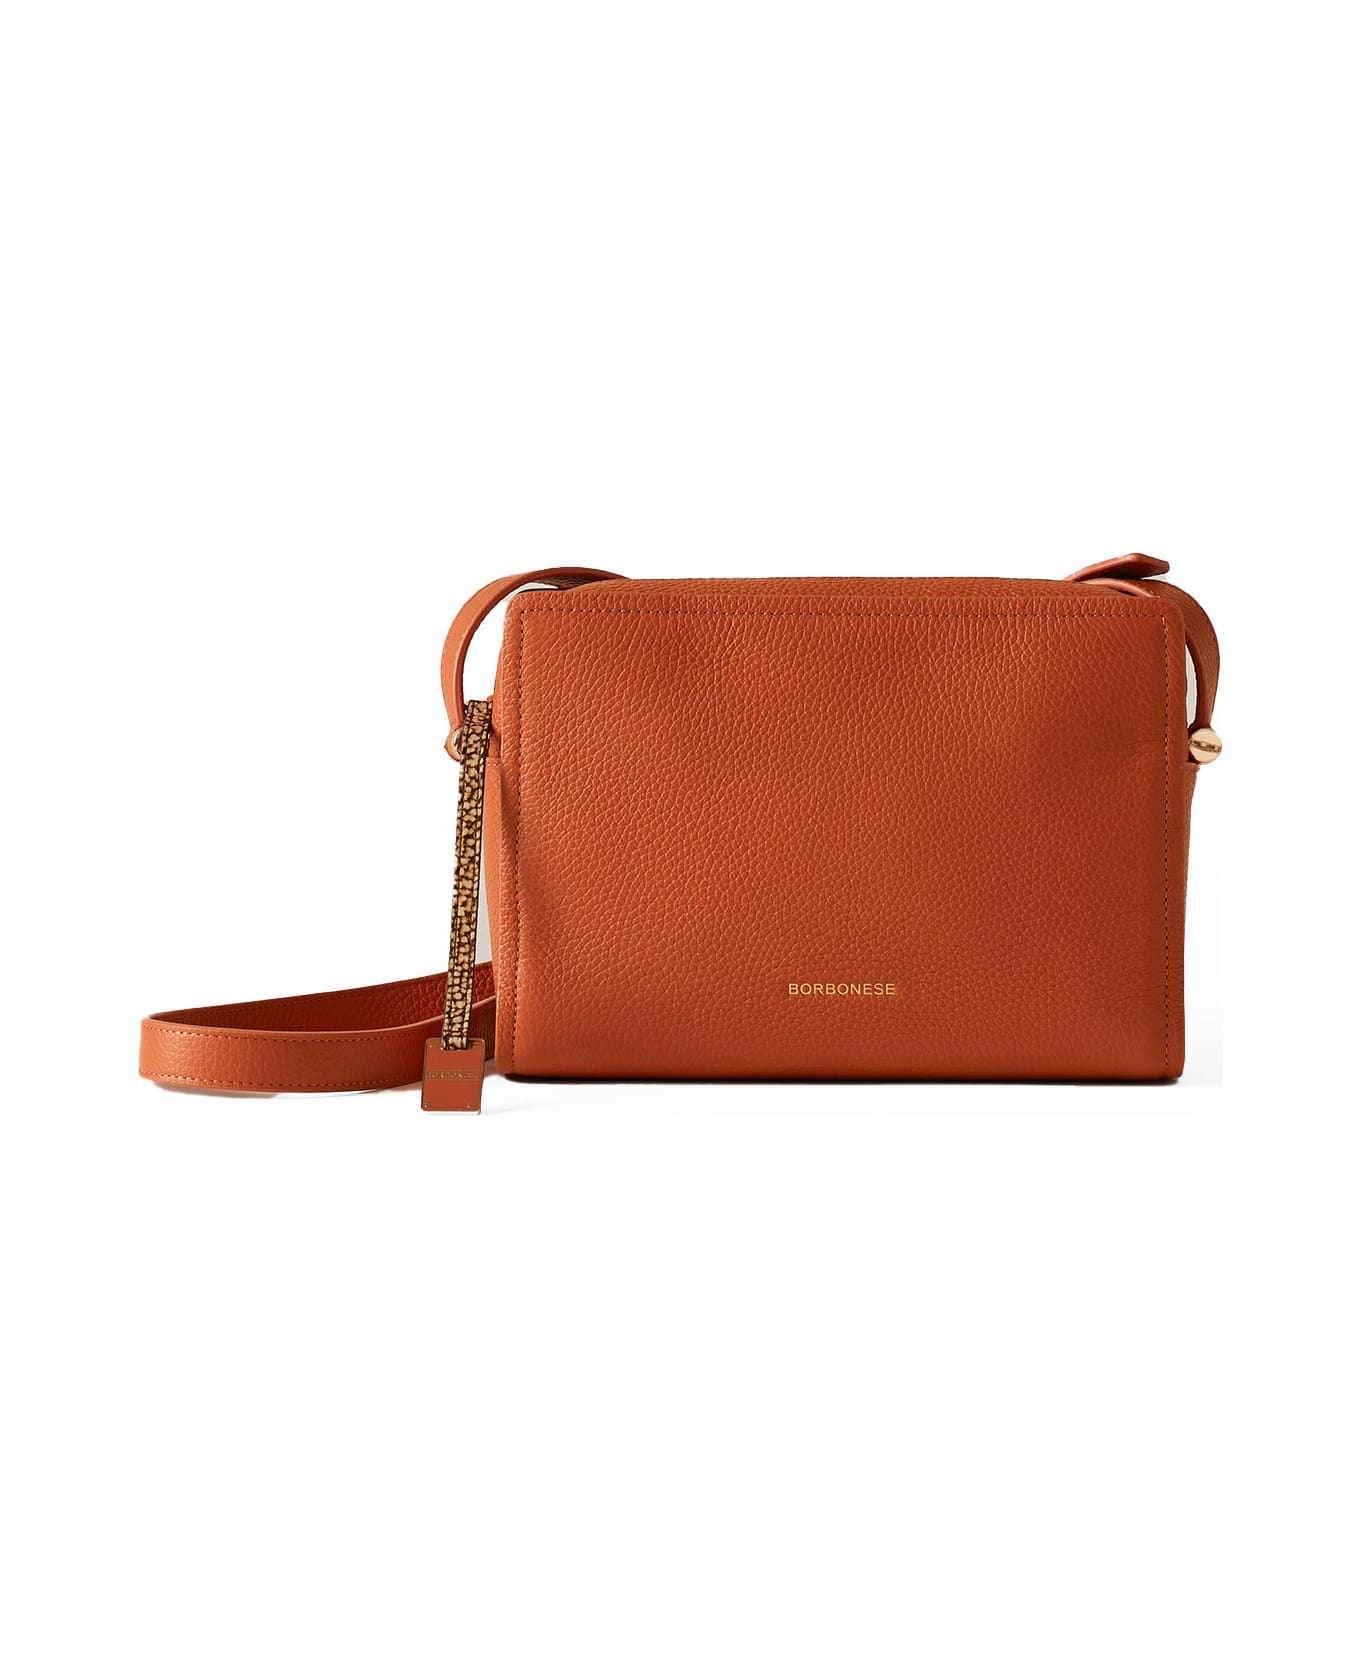 Borbonese Bolt Medium Shoulder Bag In Grained Leather - ARANCIO/OP NATURALE